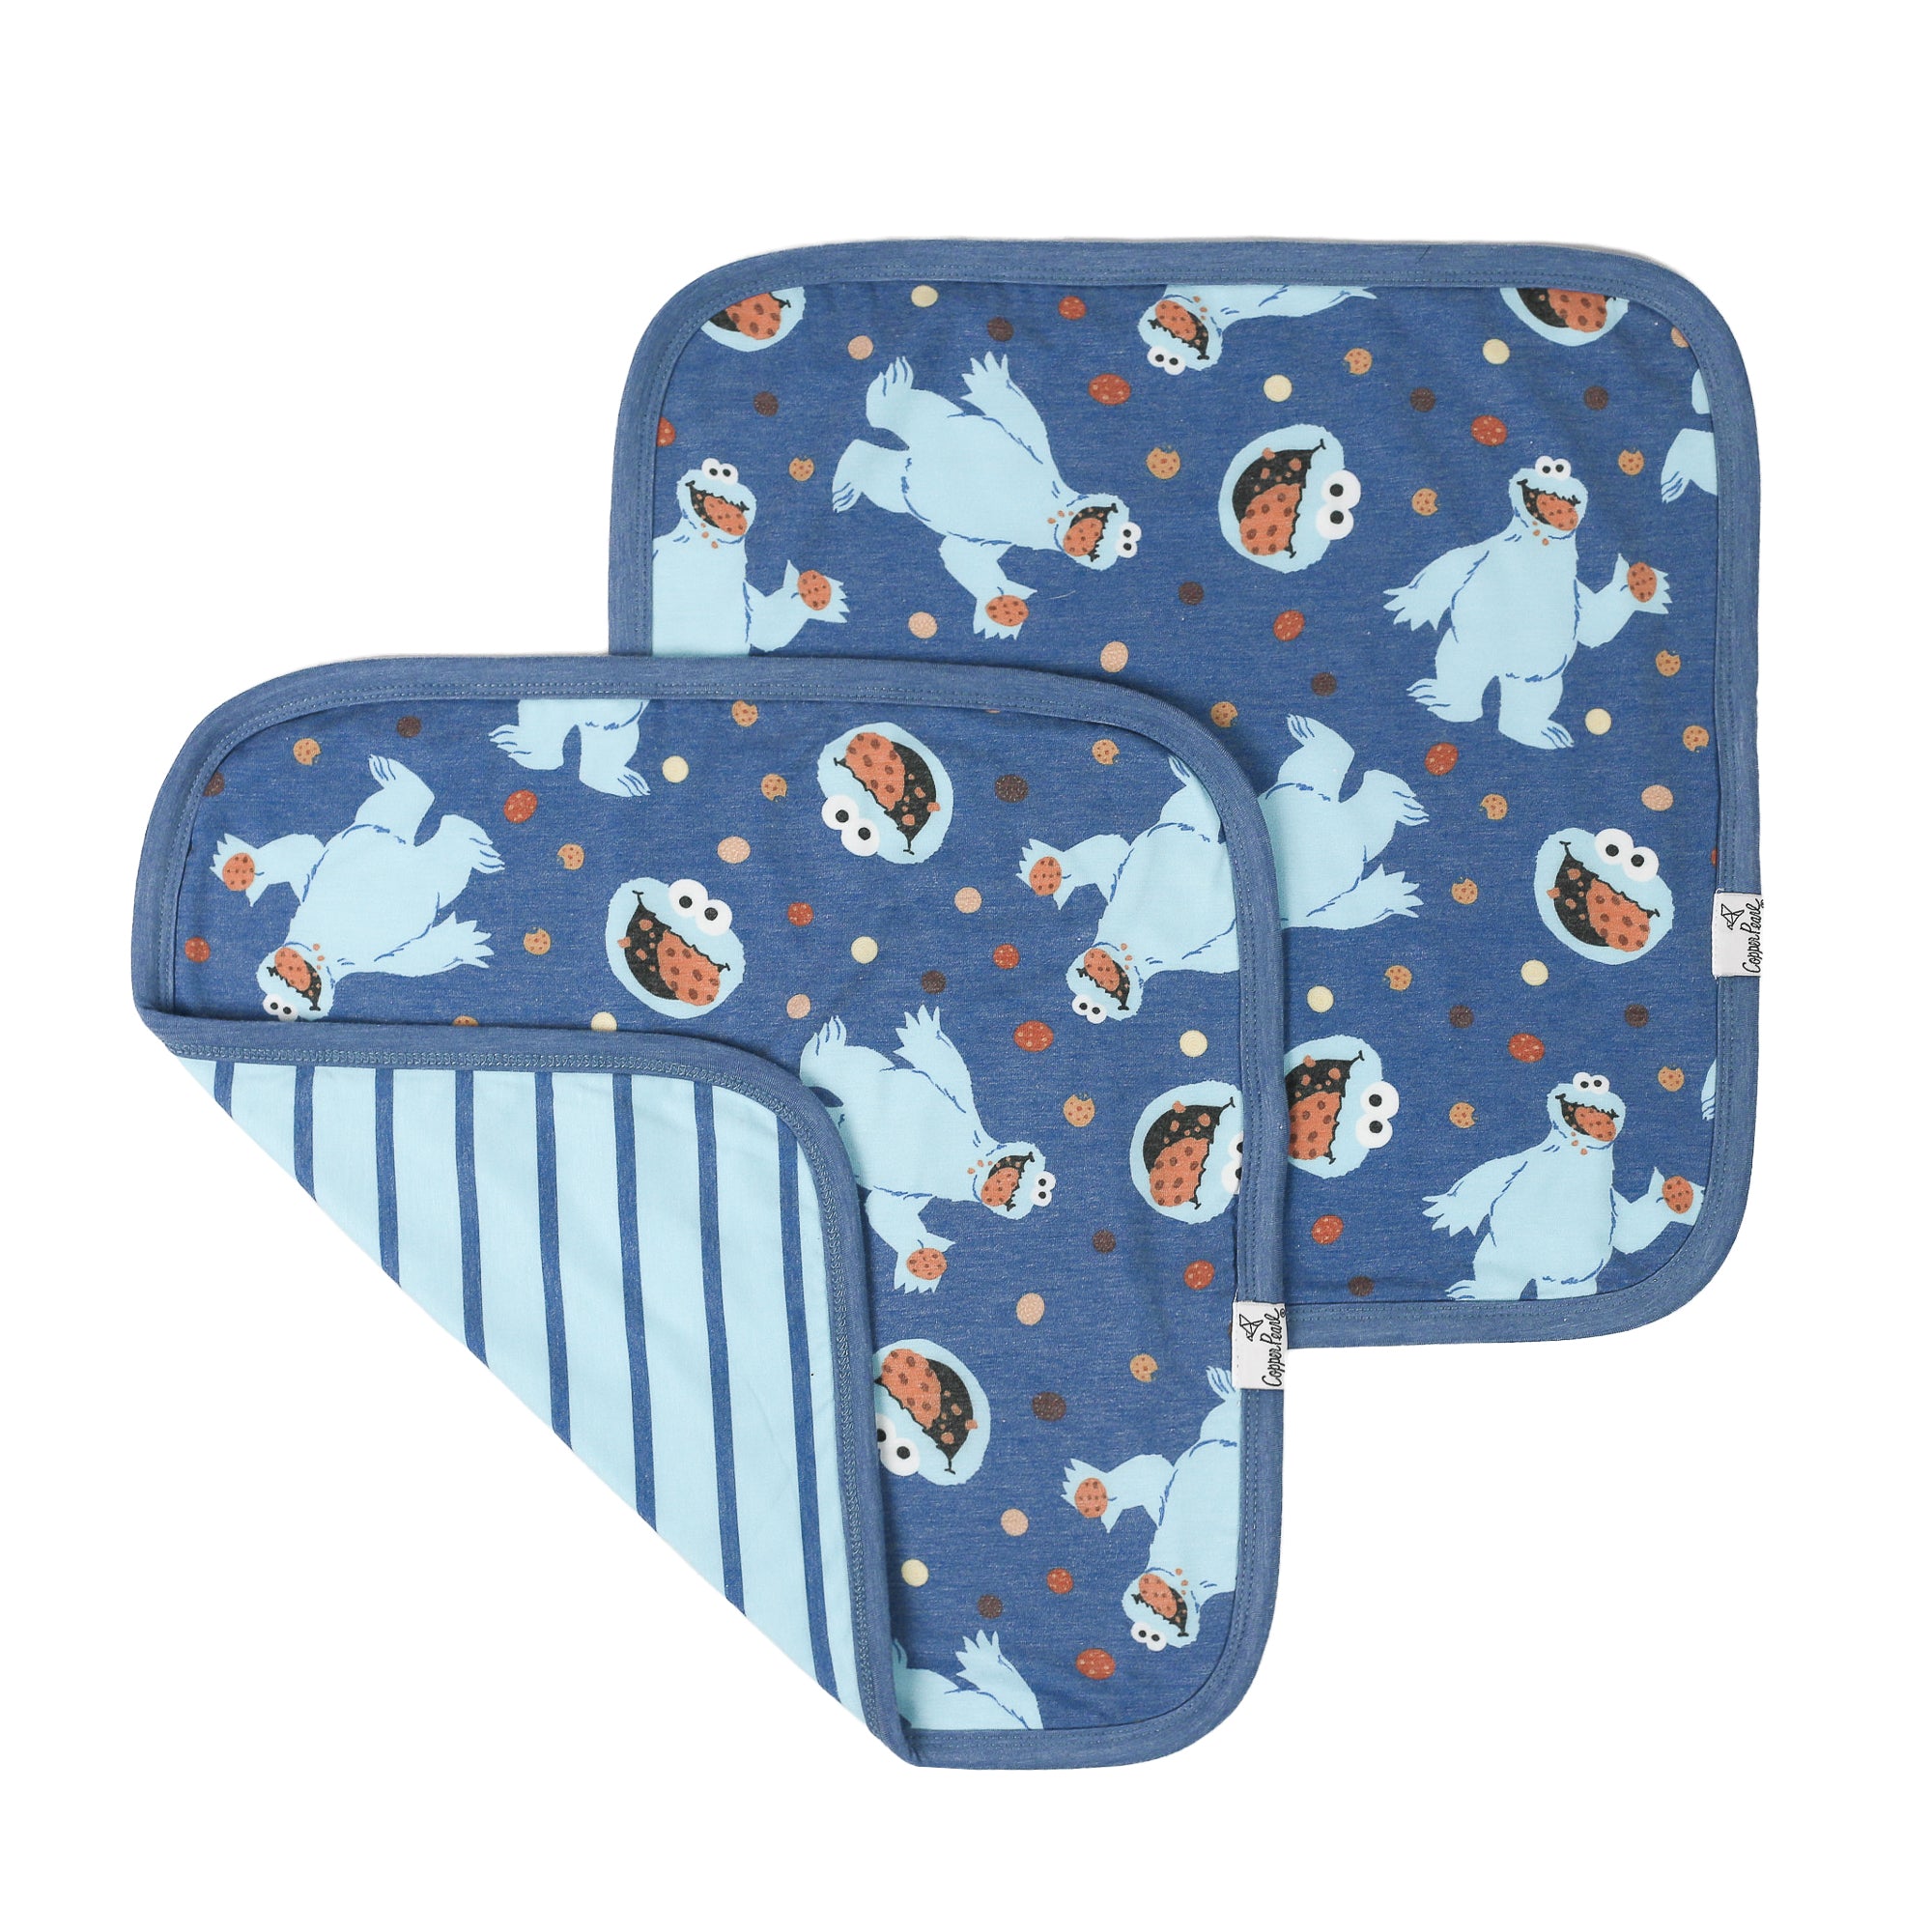 Three-Layer Security Blanket Set - Cookie Monster